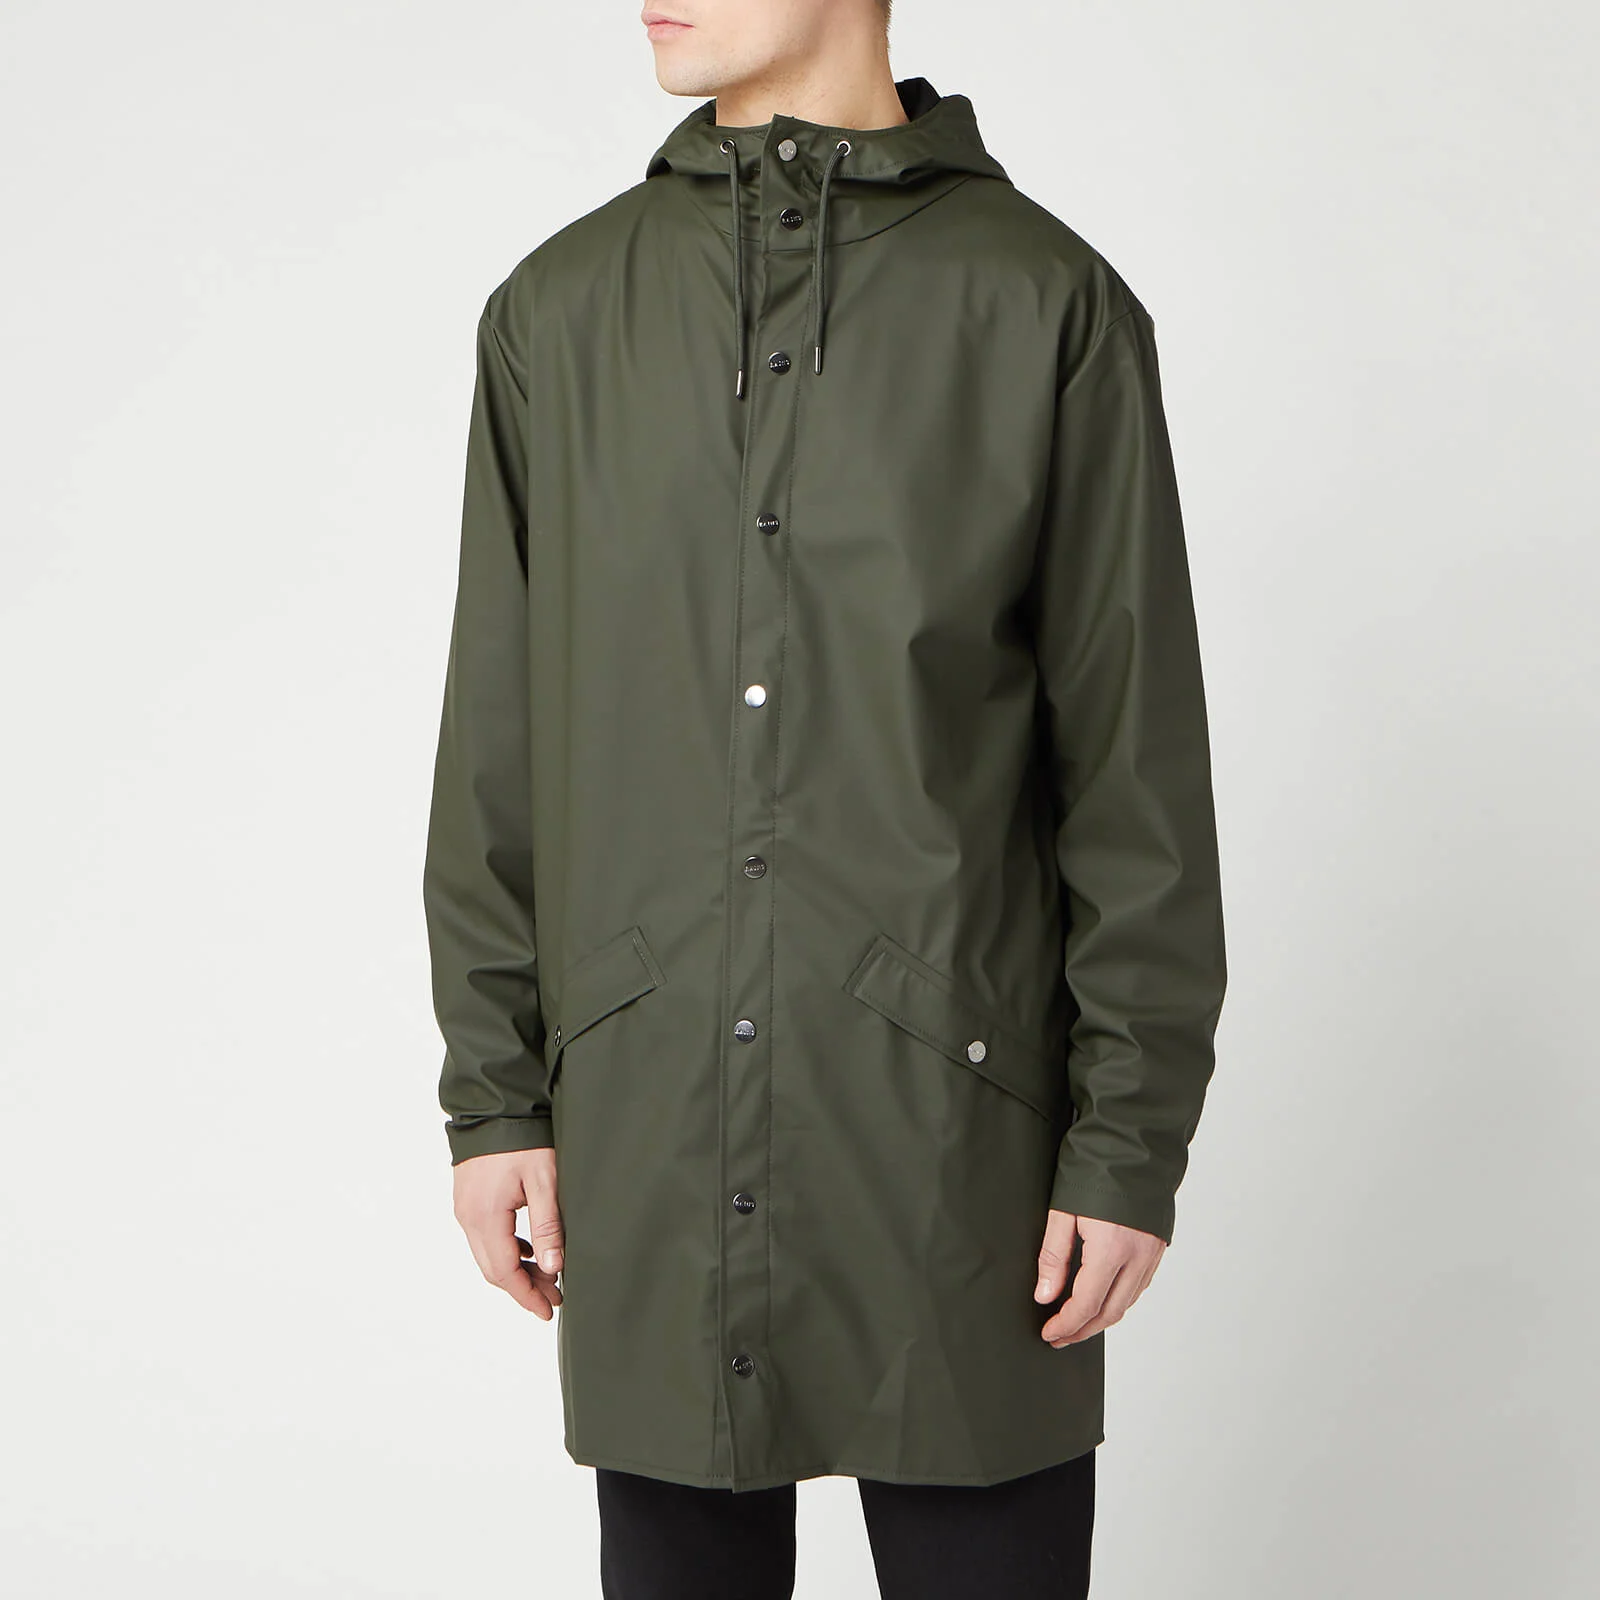 Rains Long Jacket - Green - S Image 1